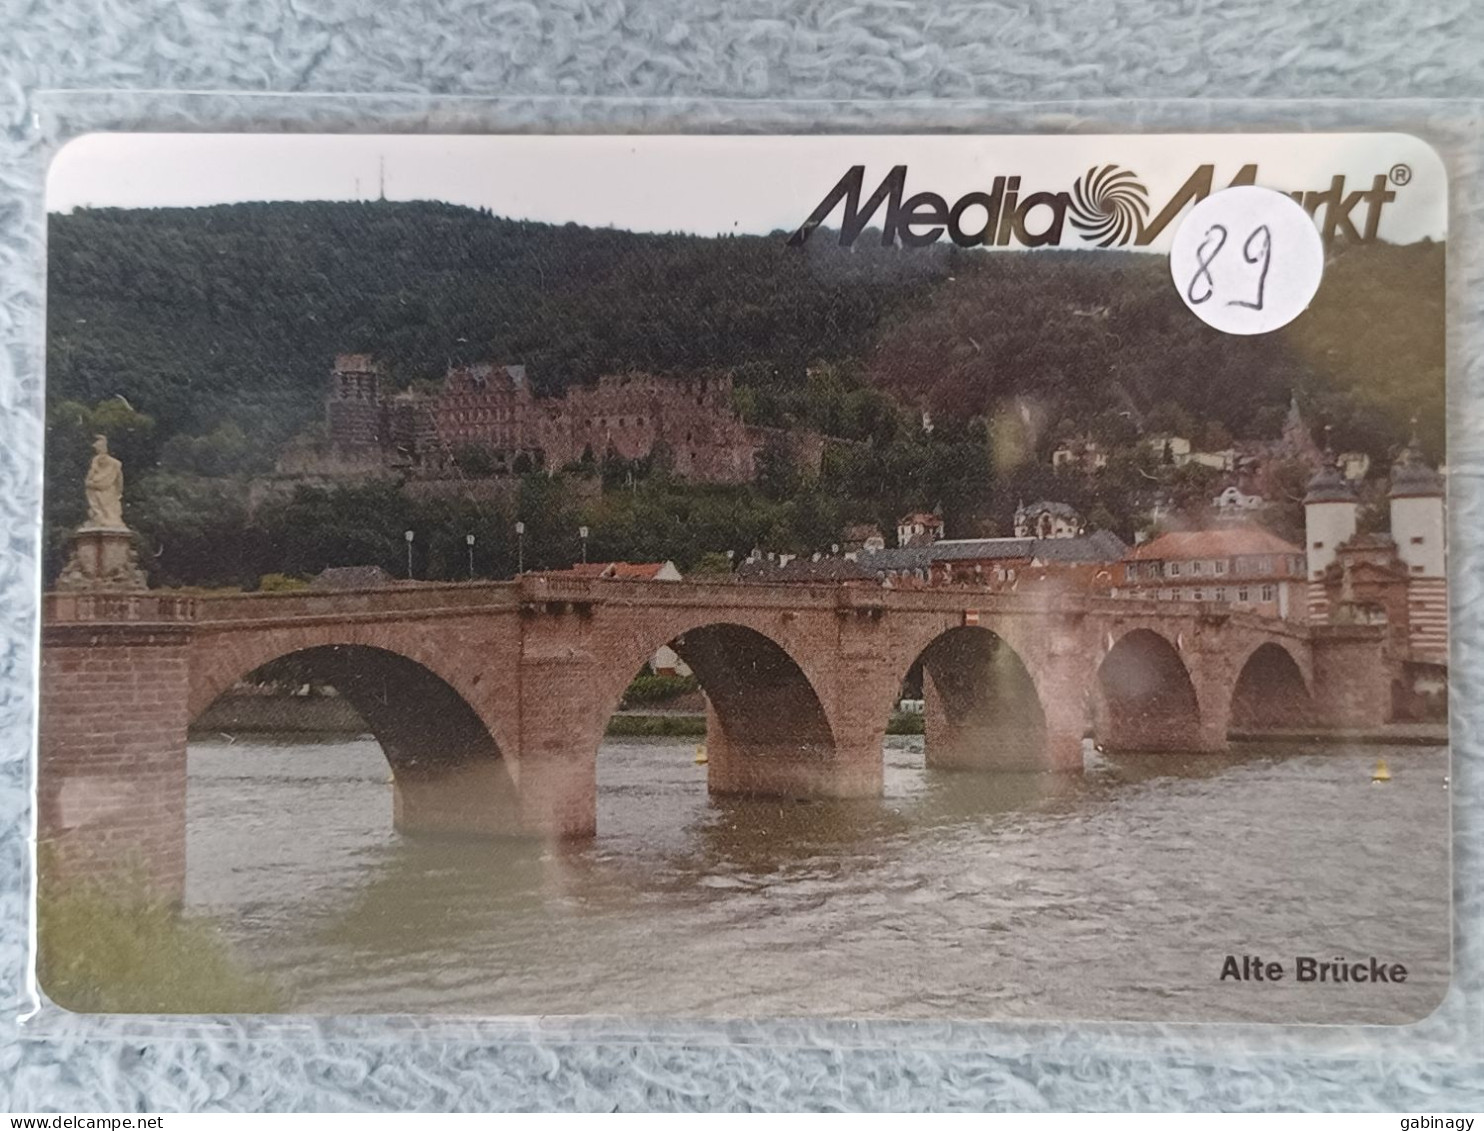 GIFT CARD - GERMANY - MEDIA MARKT 089 - Heidelberg (Alte Brücke) - BRIDGE - Gift Cards